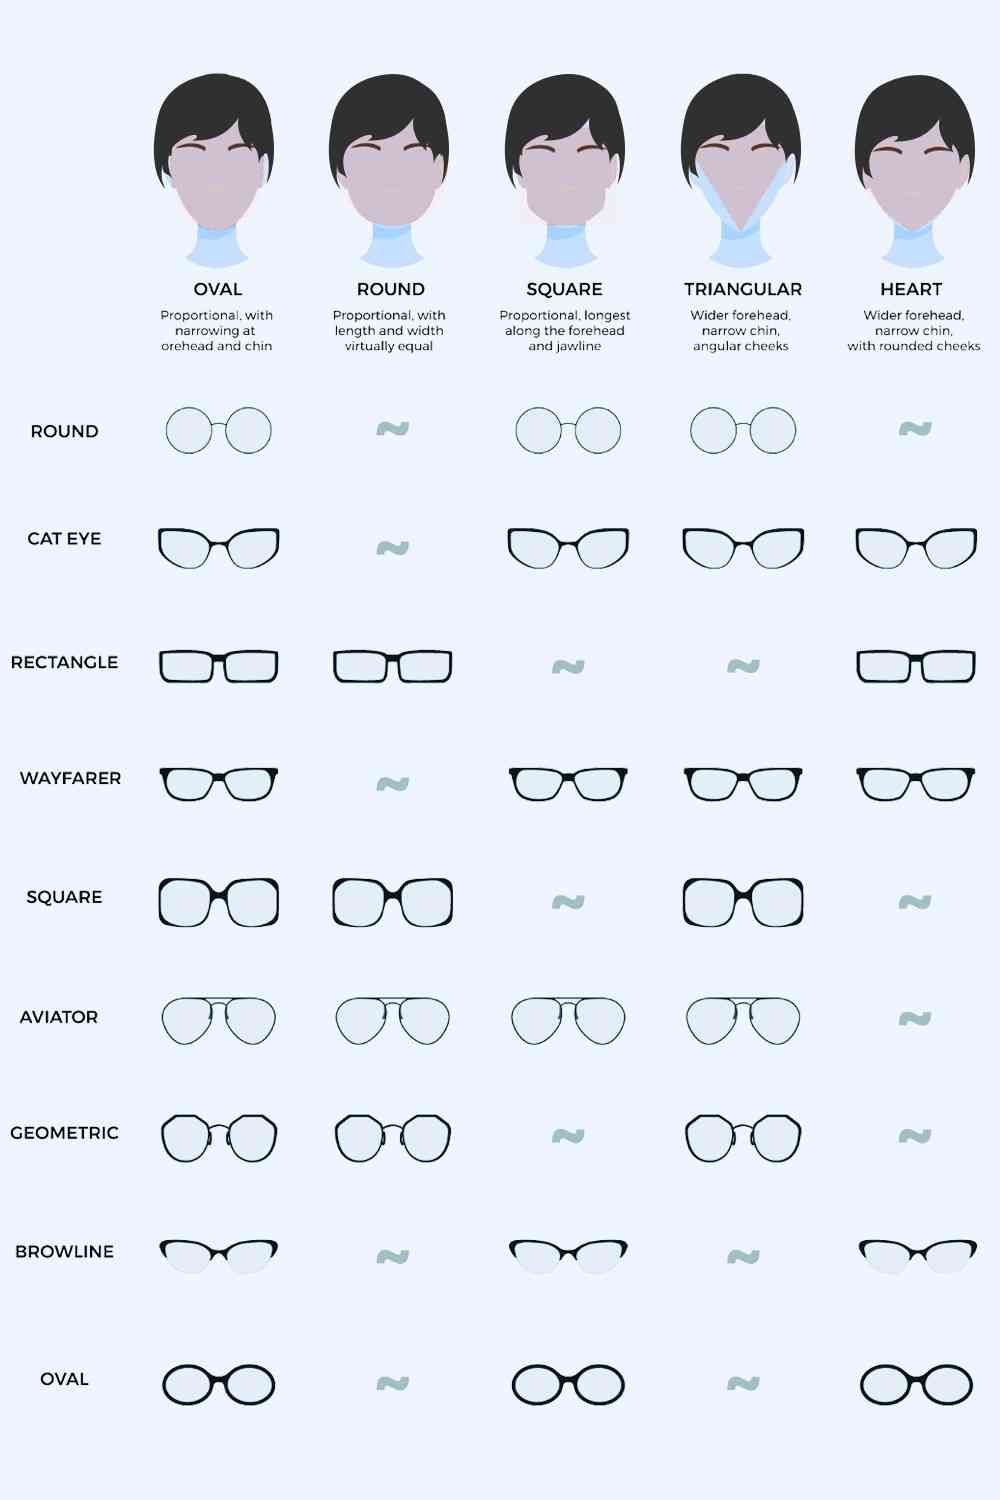 UV400 Polycarbonate Cat-Eye Sunglasses